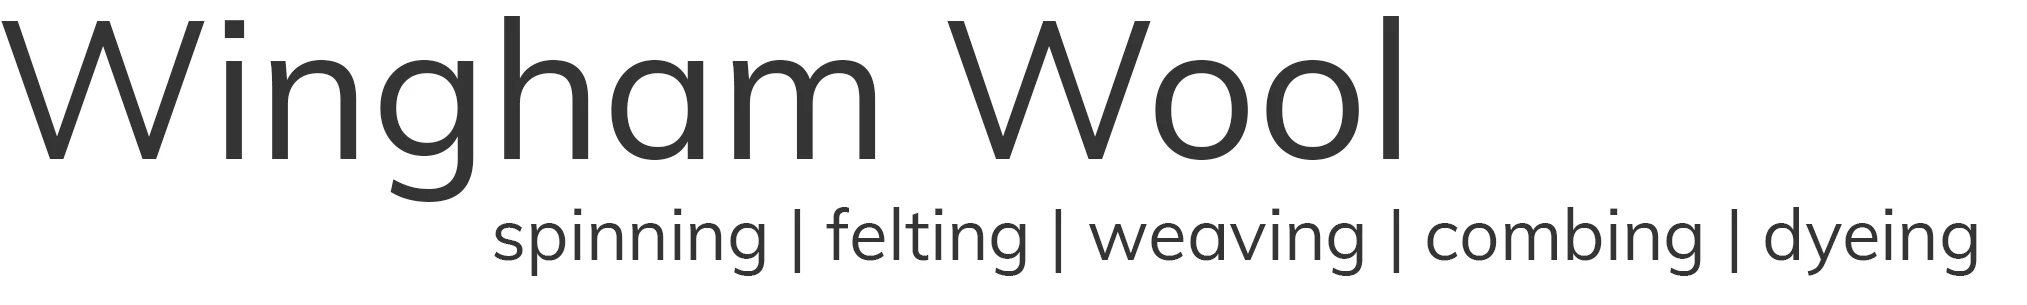 Wingham Wool Work vouchers 